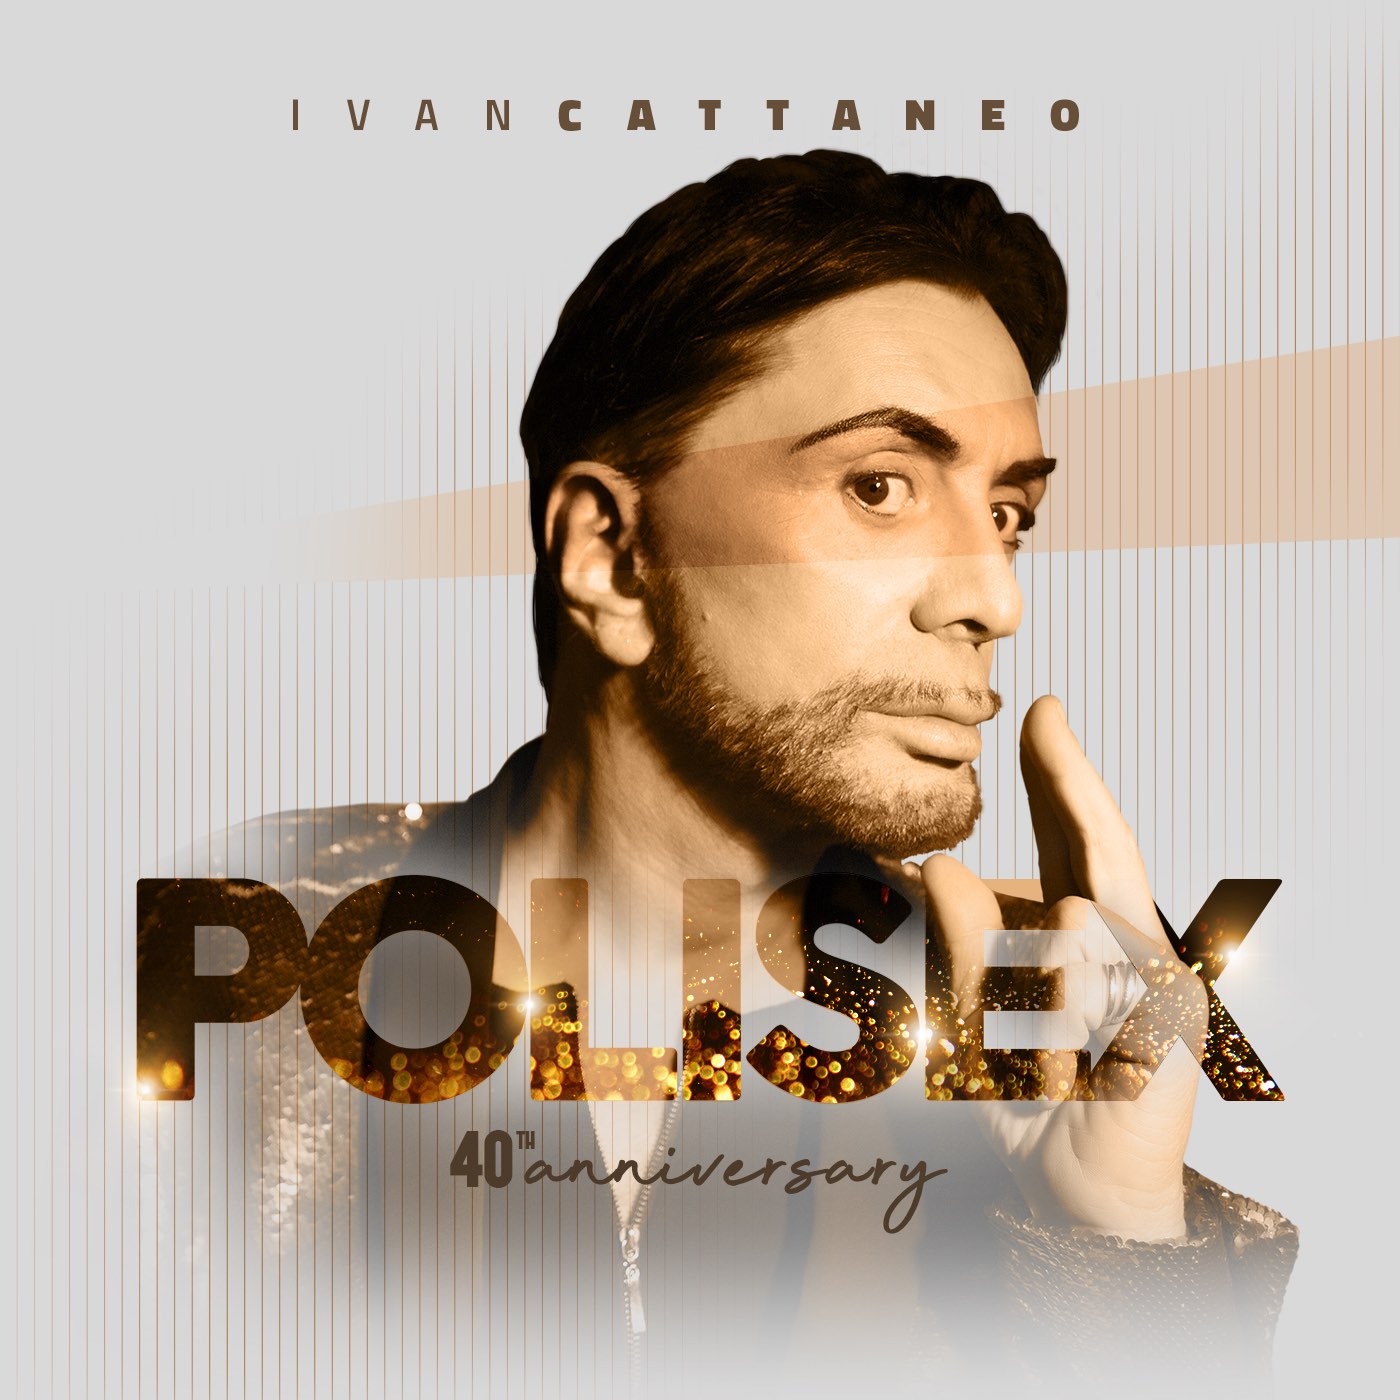 Ivan-Cattaneo-Polisex